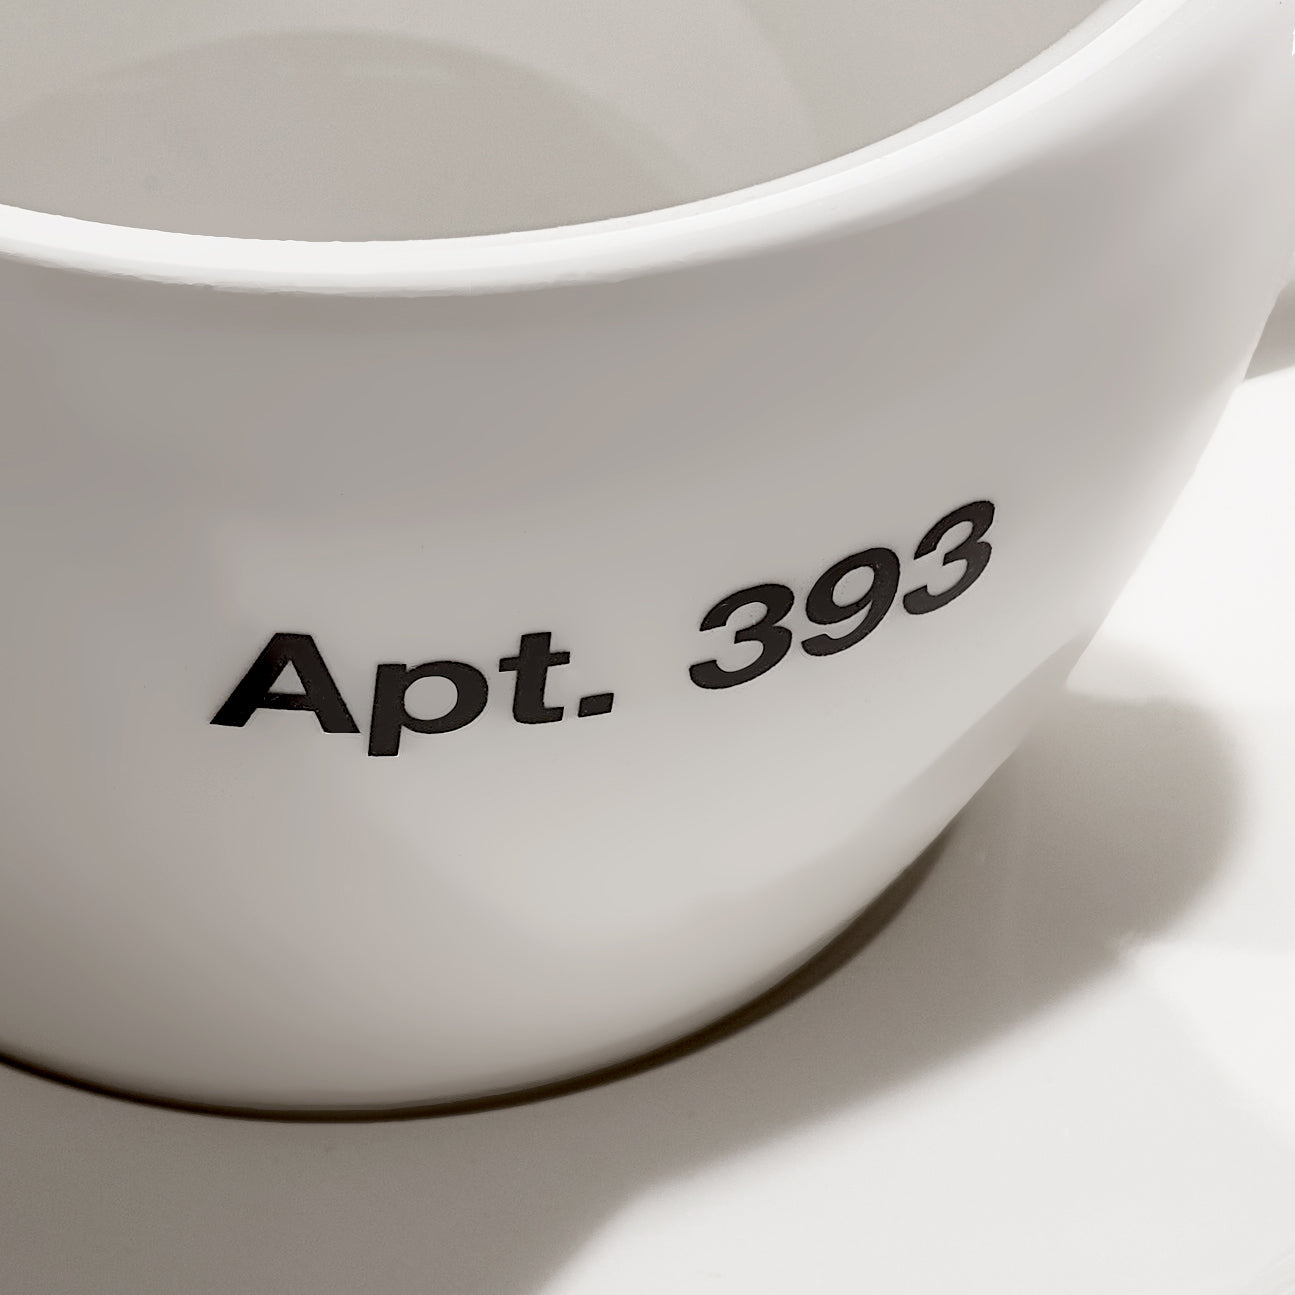 Apt. 393 Acme Cup